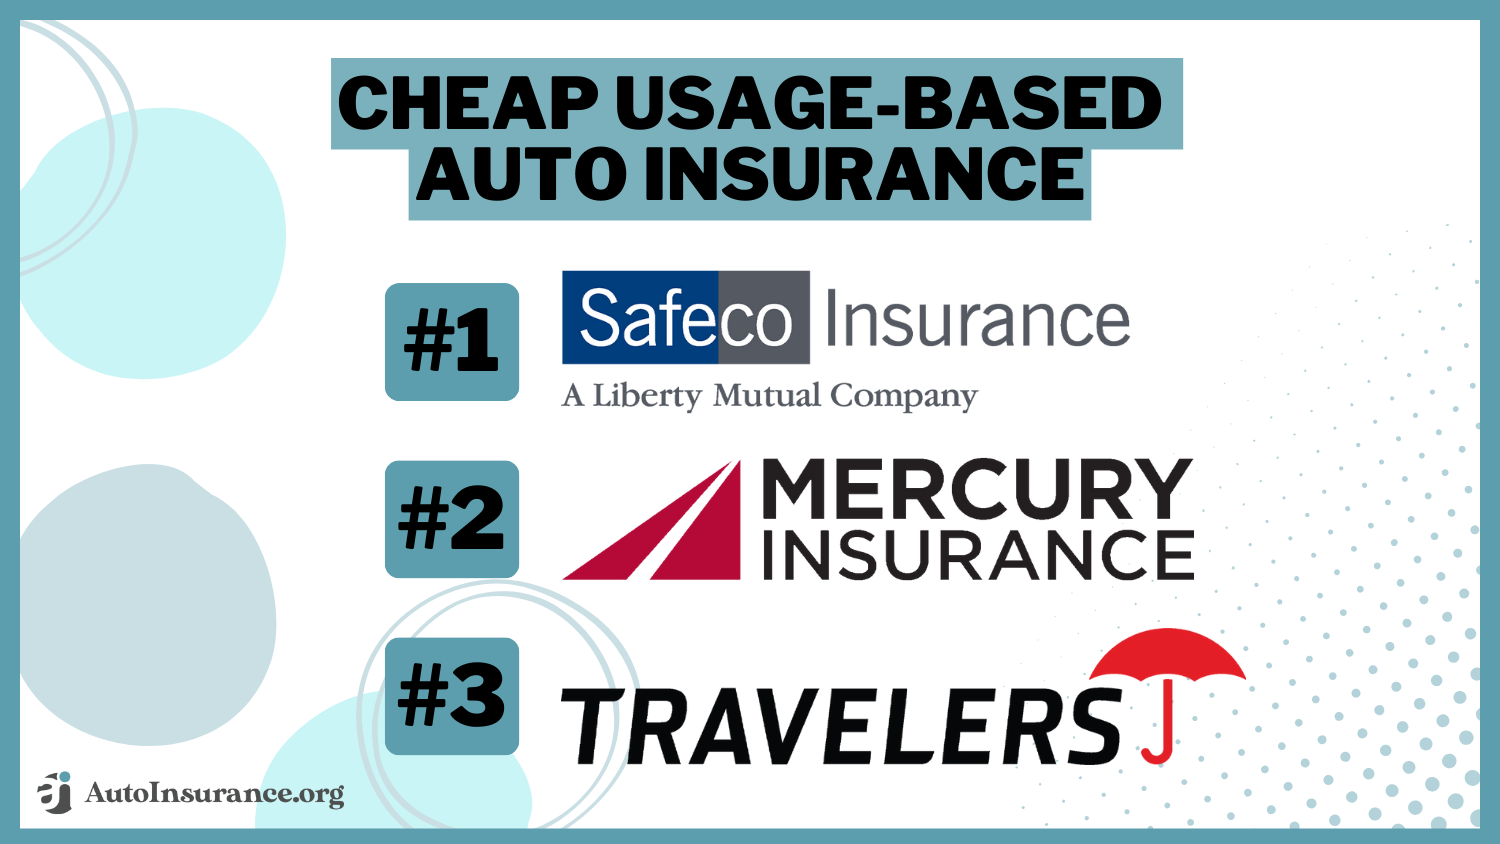 cheap usage-based auto insurance: Safeco, Mercury, Travelers